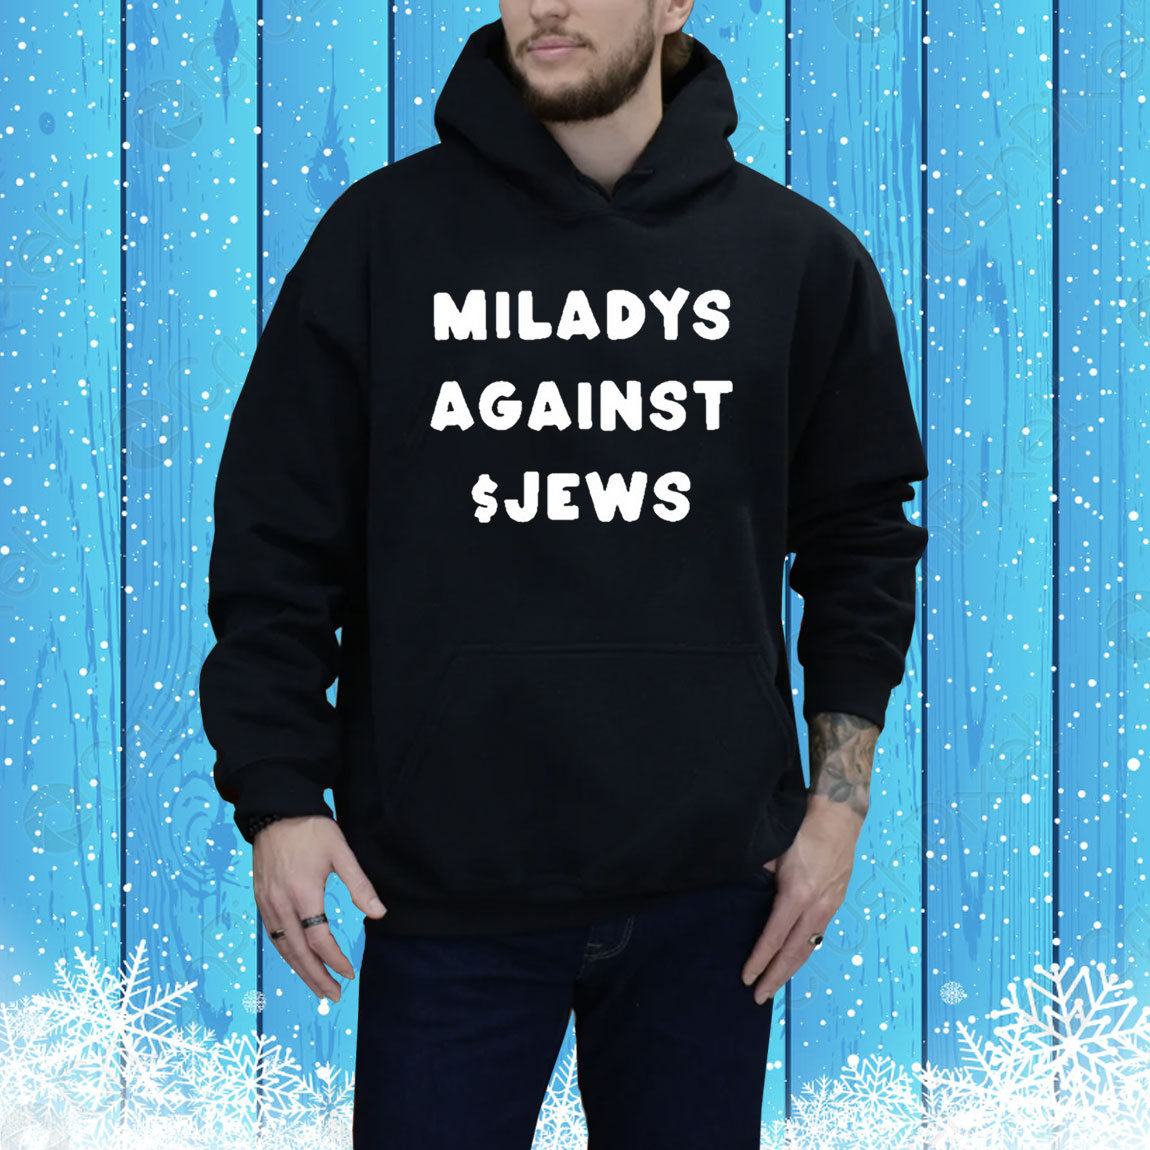 Miladys Against Jews Shirt